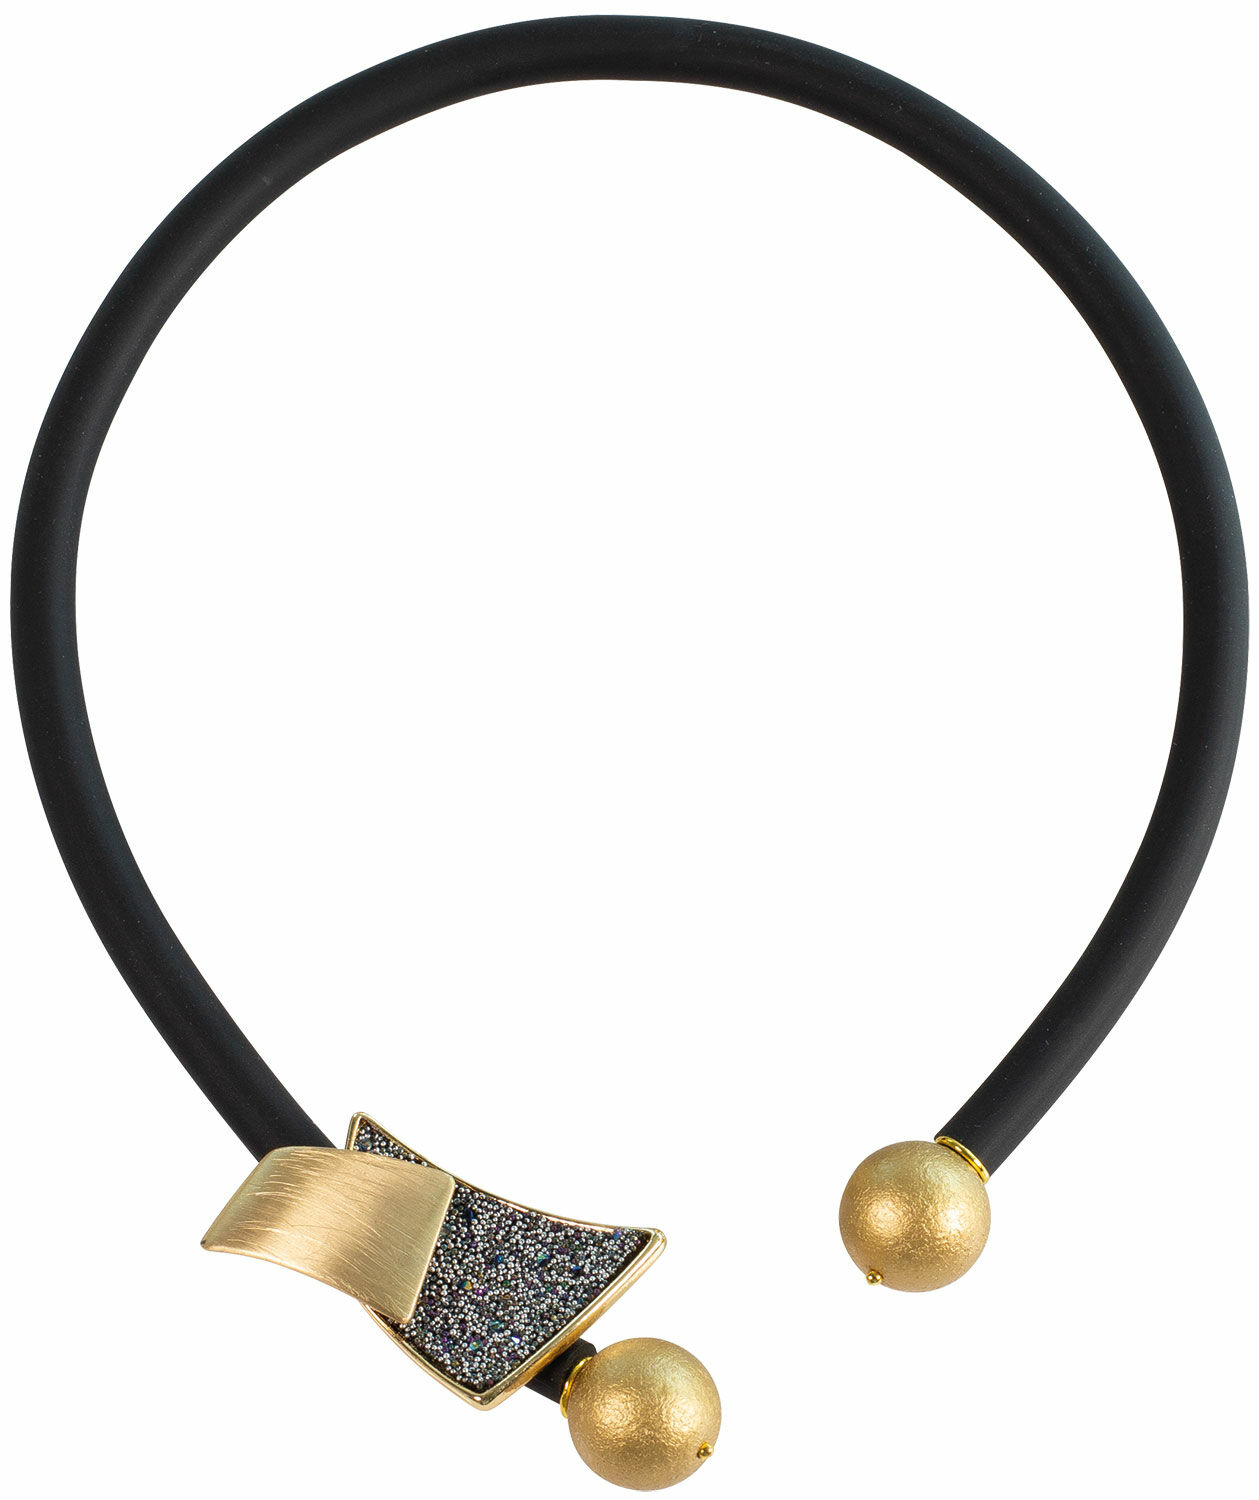 Necklace "Esther" by Anna Mütz